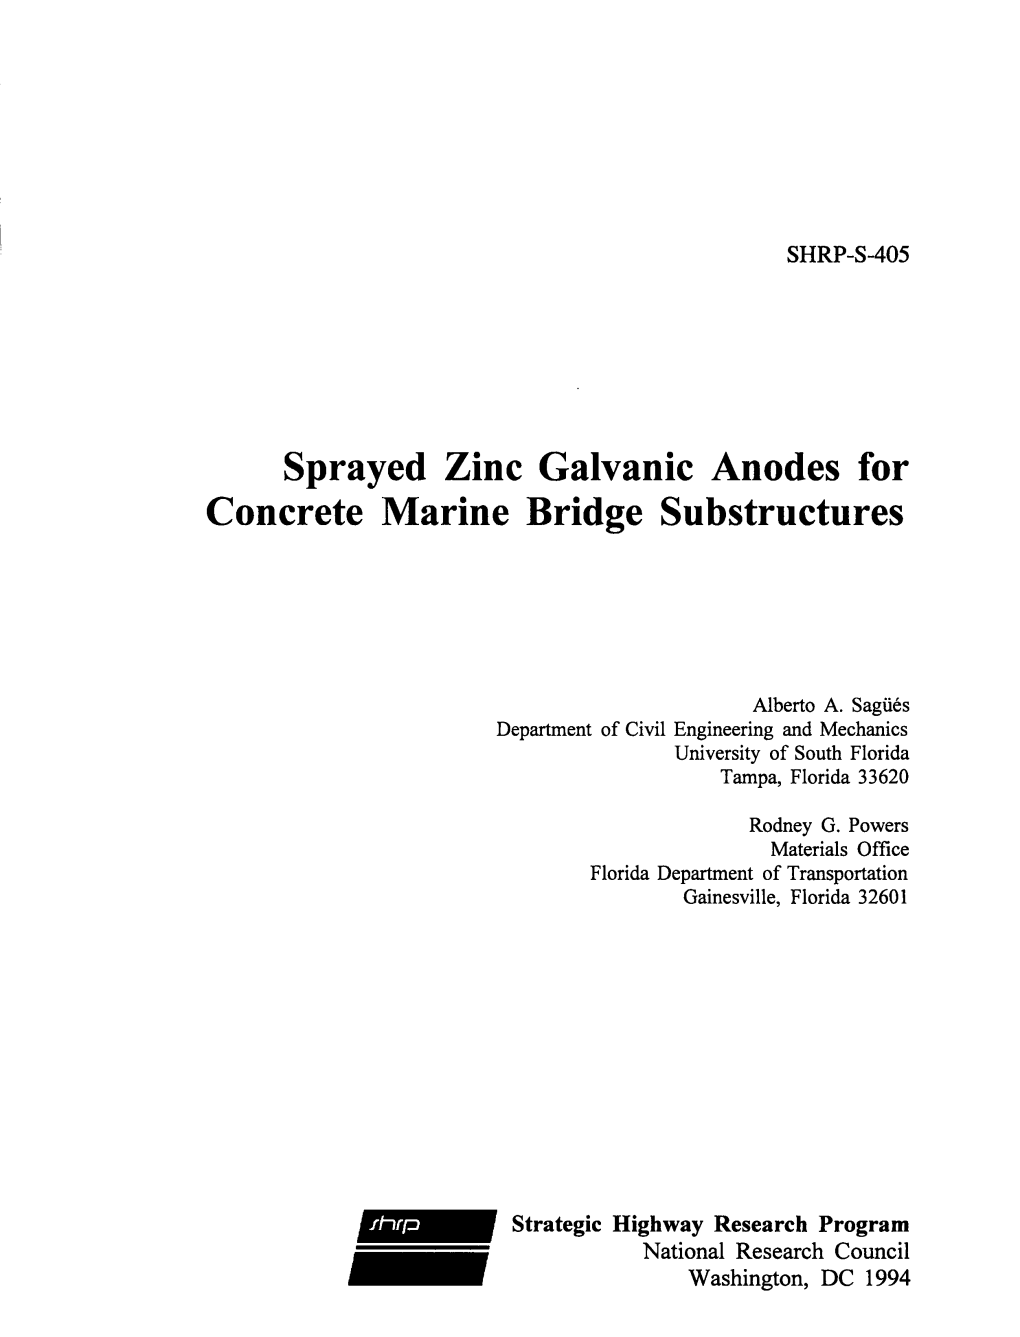 Sprayed Zinc Galvanic Anodes for Concrete Marine Bridge Substructures